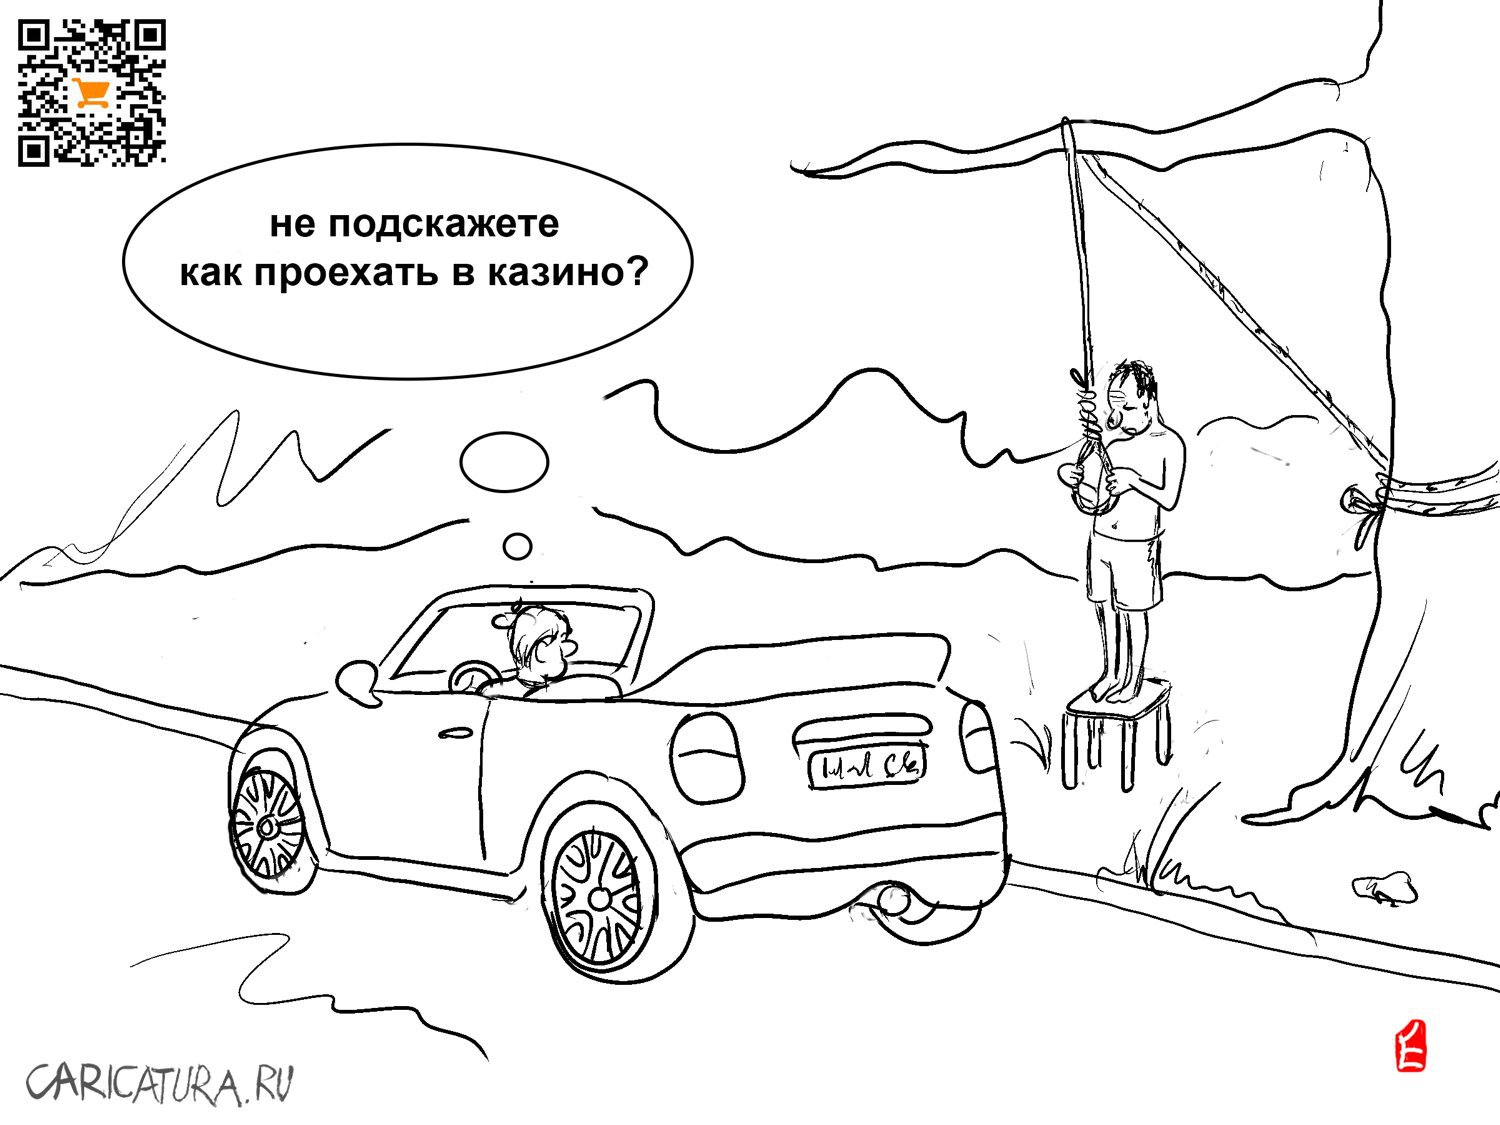 Карикатура "Без слов", Евгений Лапин